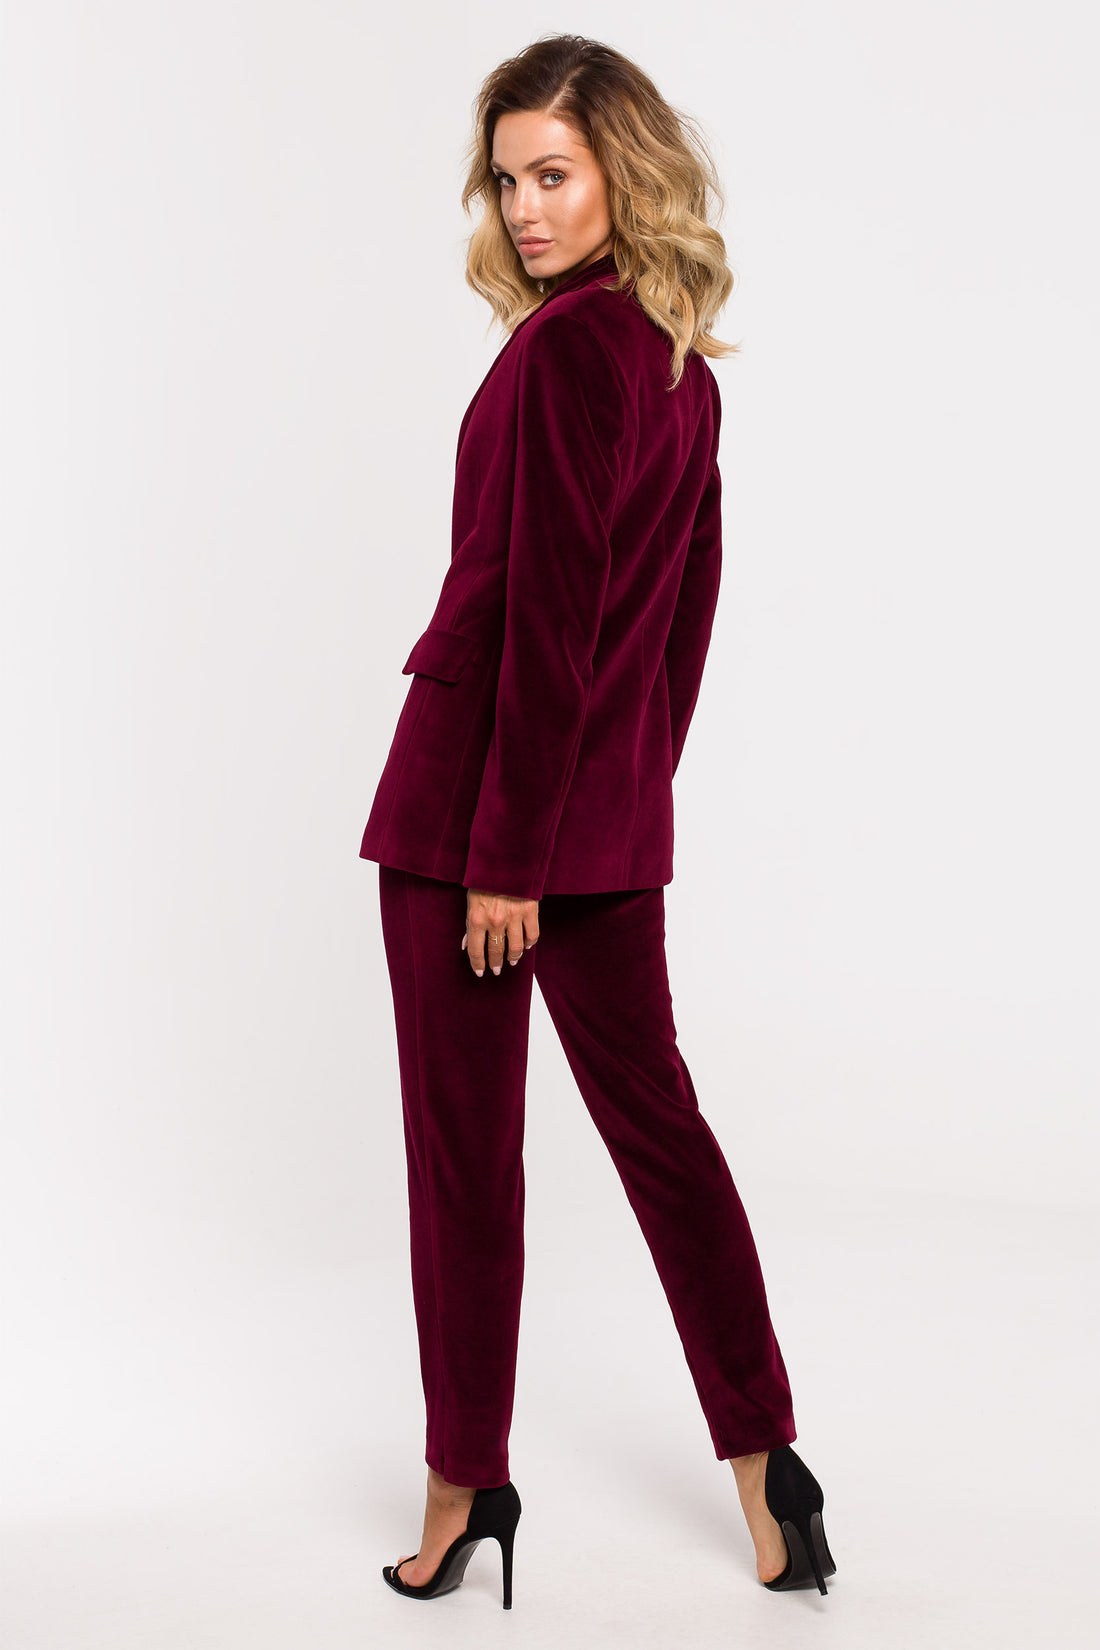 Wine-Red Velvet Single-Button Blazer Suit Separate